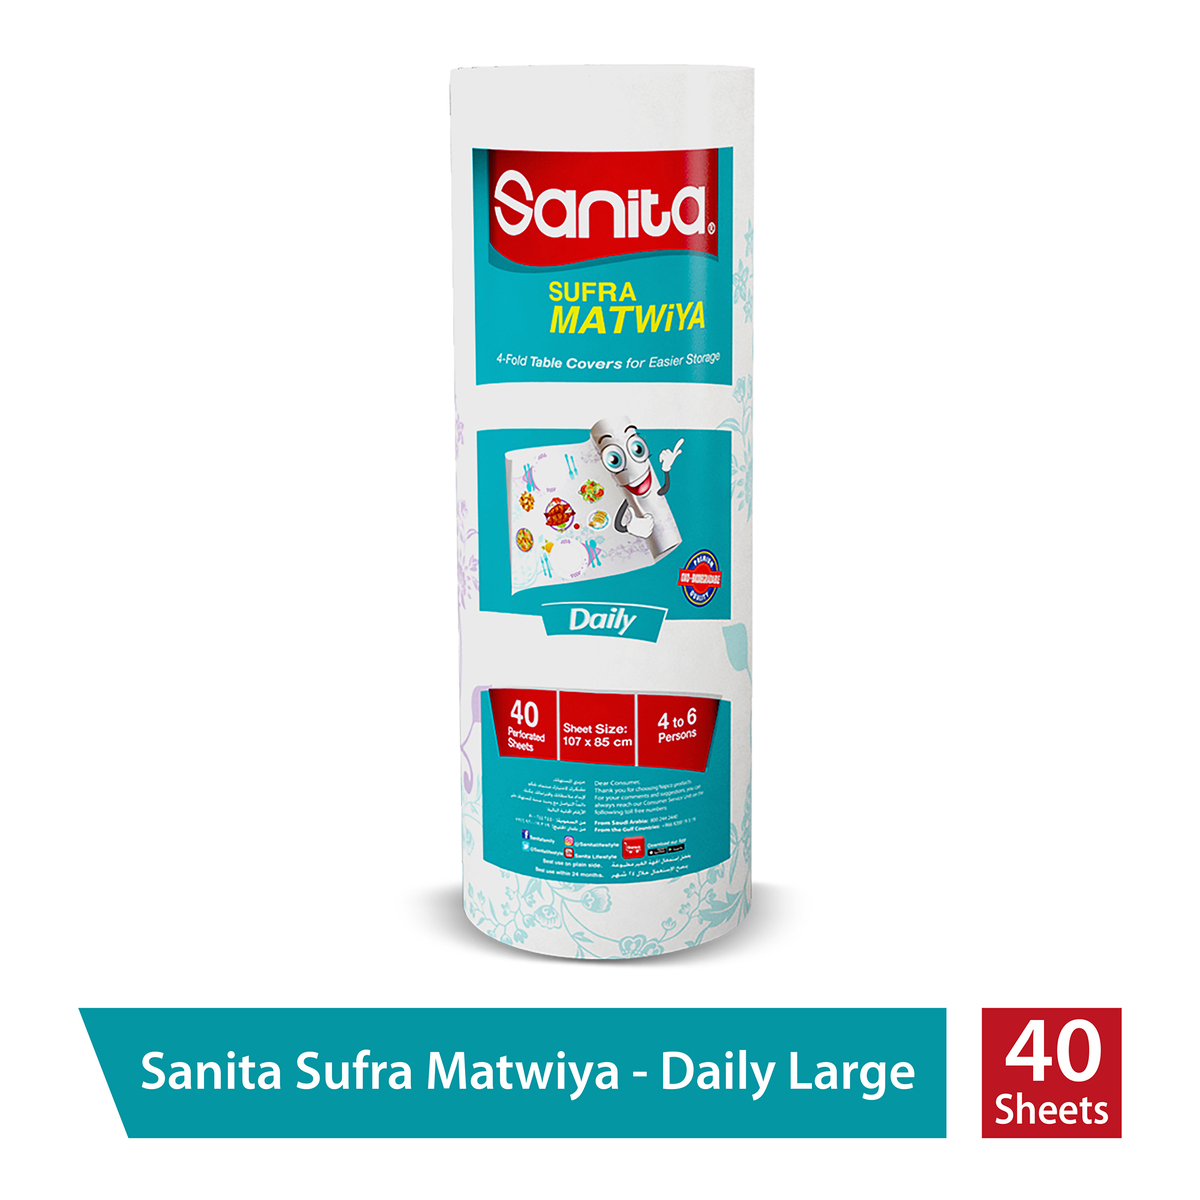 Sanita Table Covers Sufra Matwiya Daily Size 107 x 85cm 40pcs